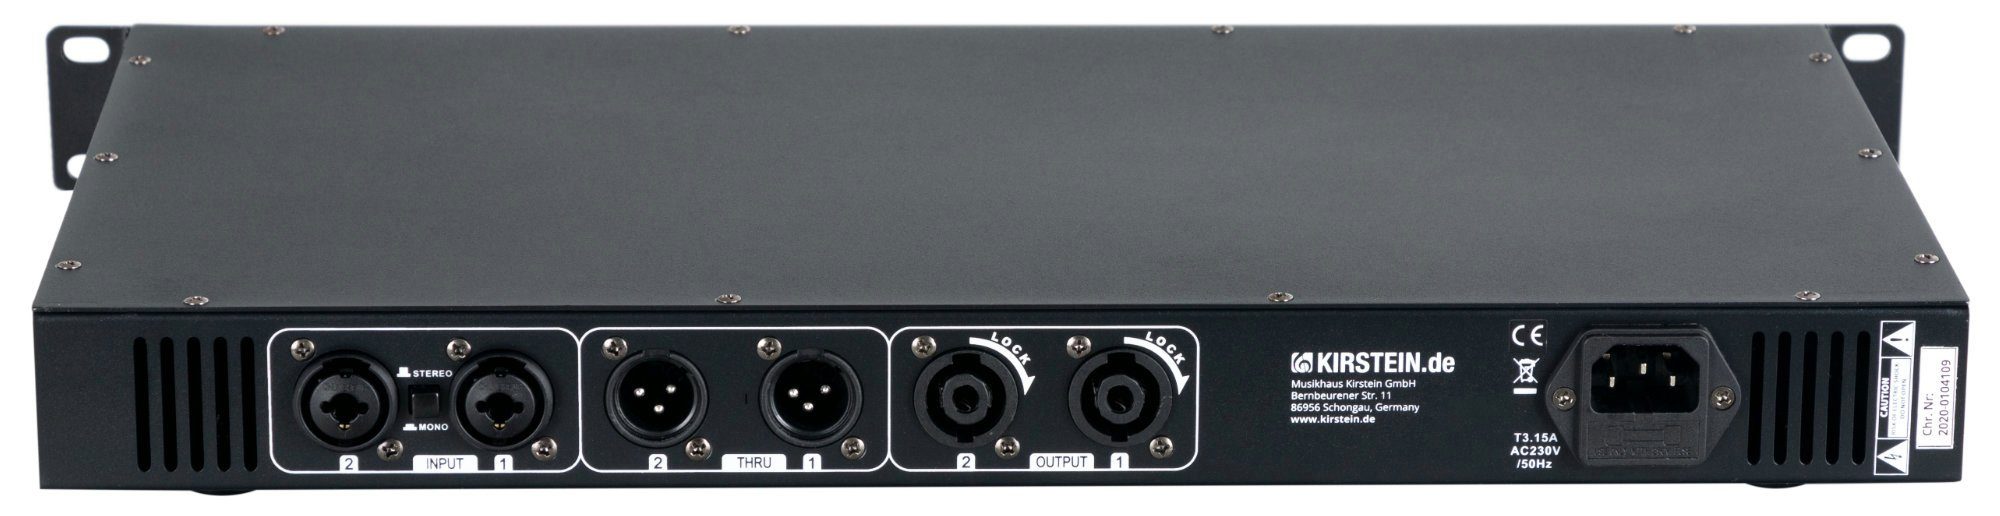 Pronomic P-152E MKII Endstufe 300 Monitor-Betrieb oder W, Kanäle: Audioverstärker (Anzahl 1HE geeignet für 2, Studio/HiFi)